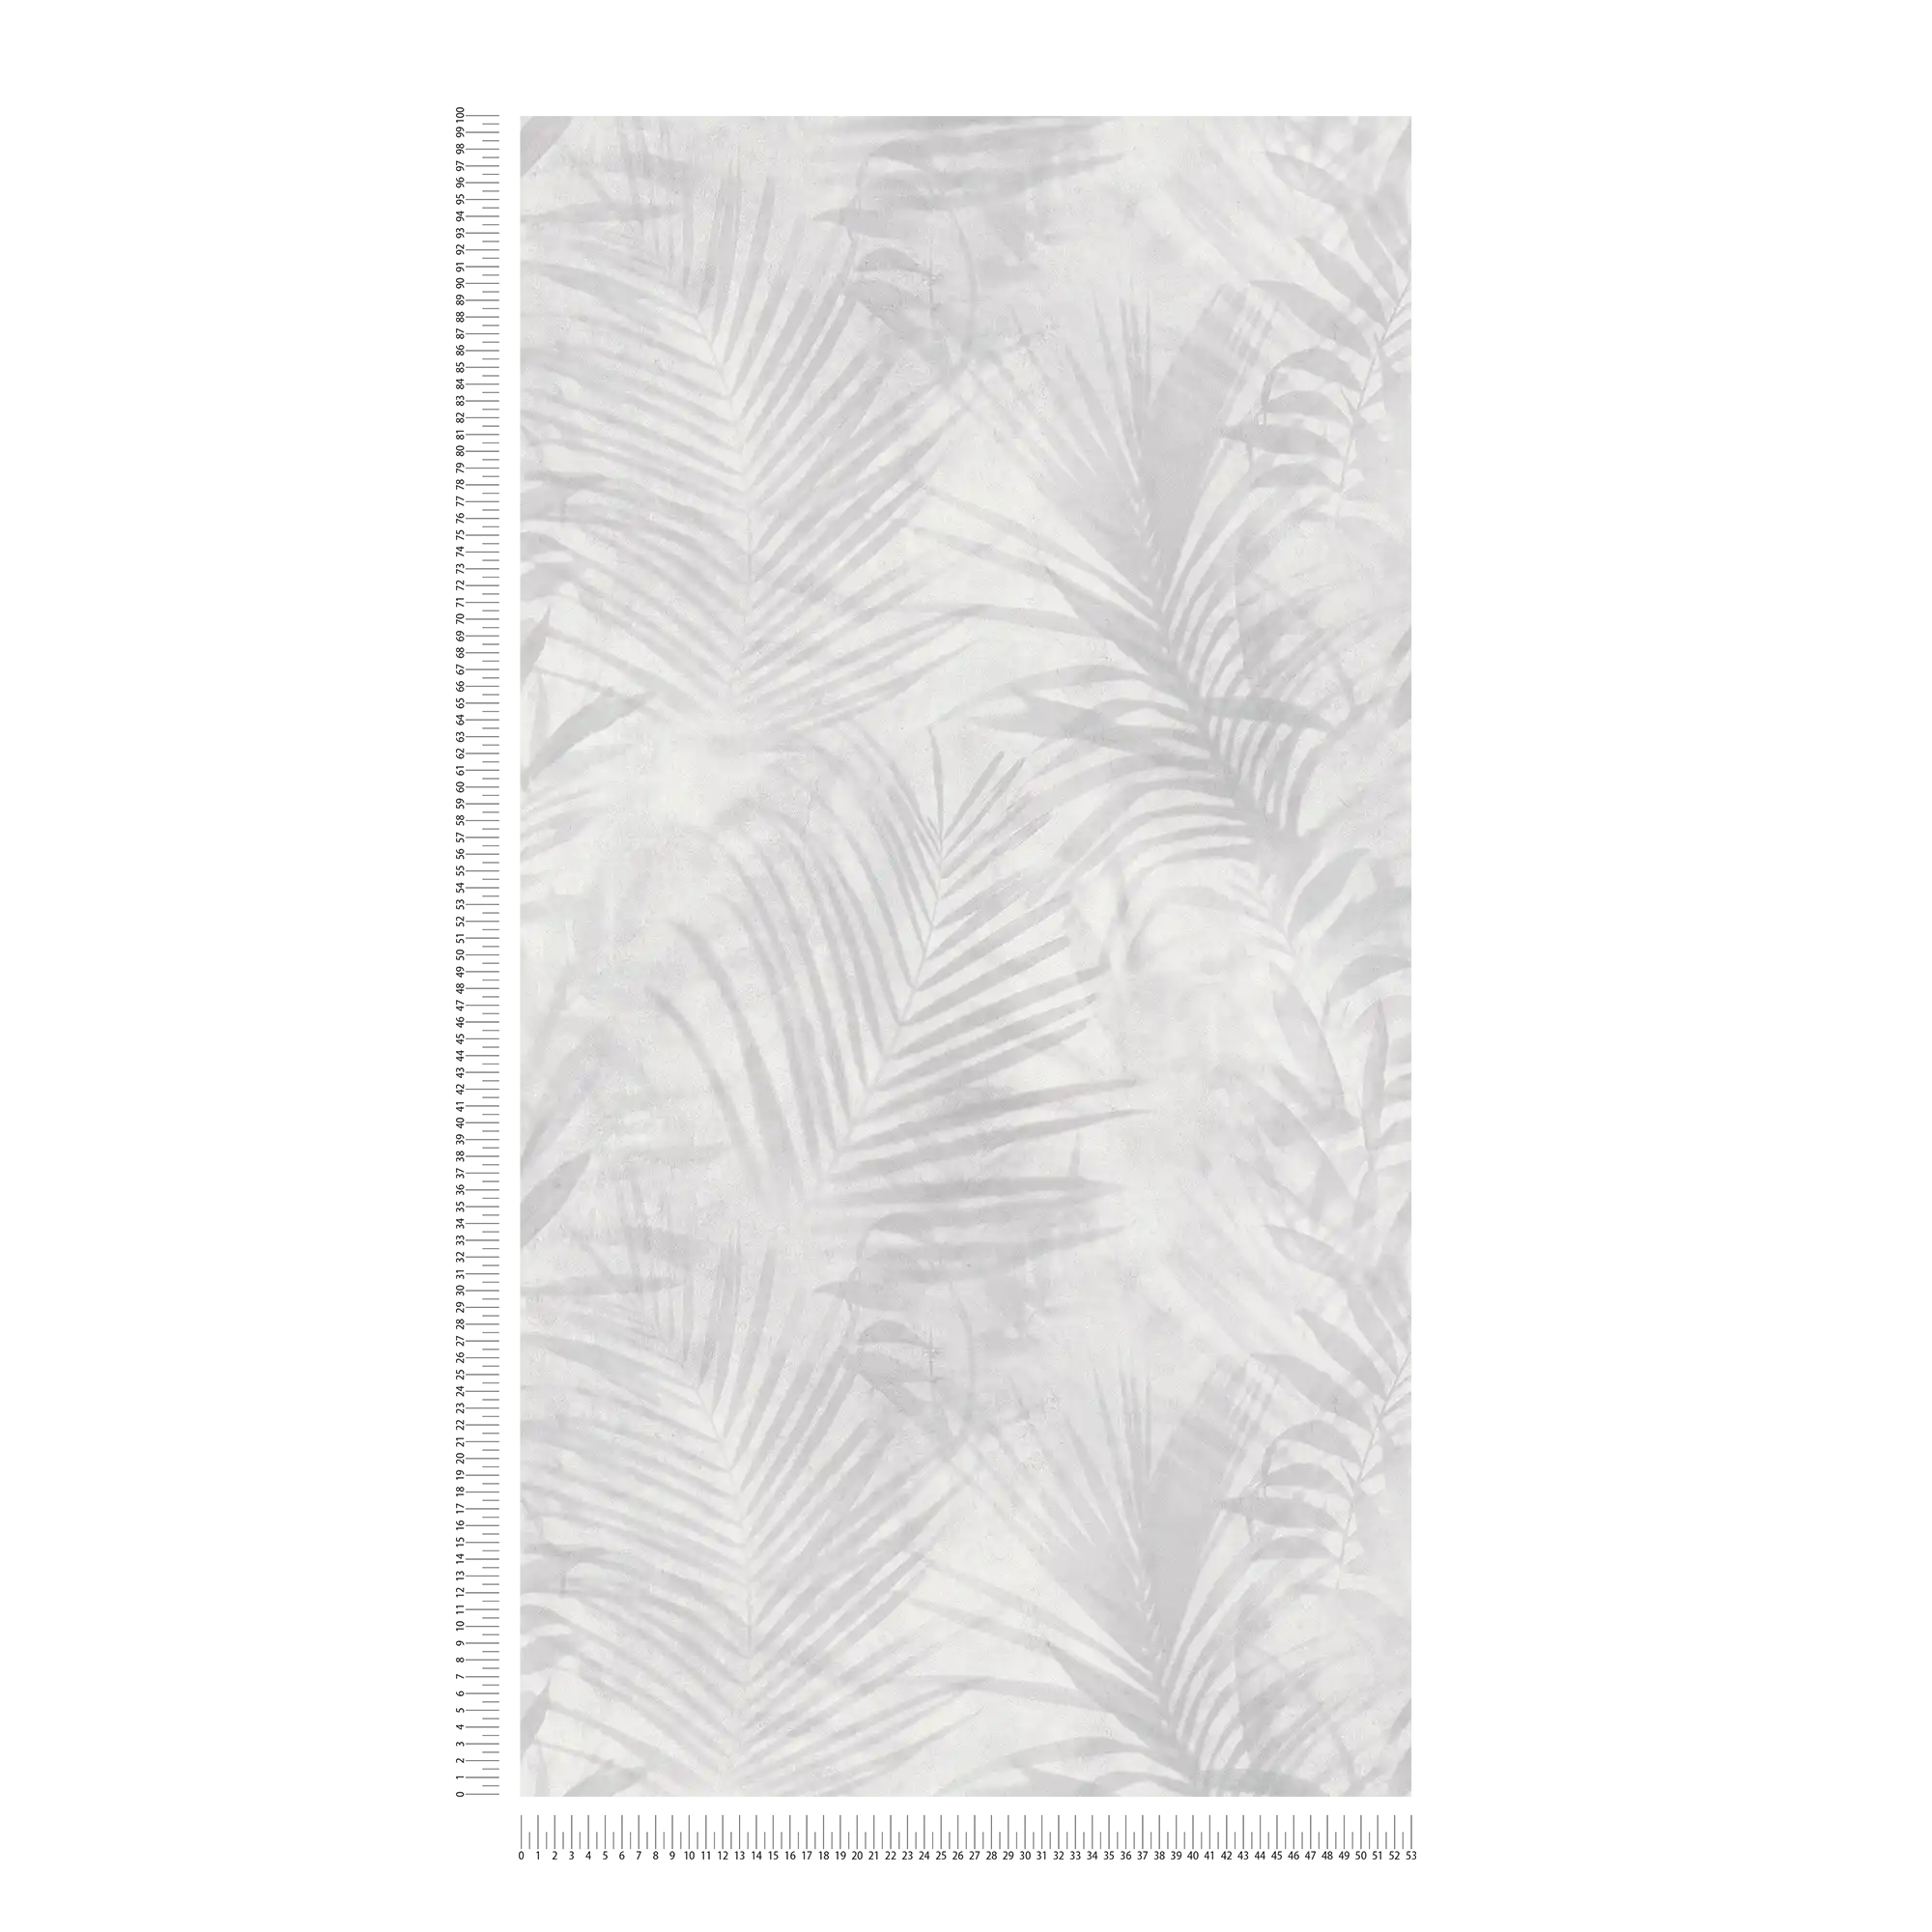             wallpaper palm tree pattern in linen look - grey, white, cream
        